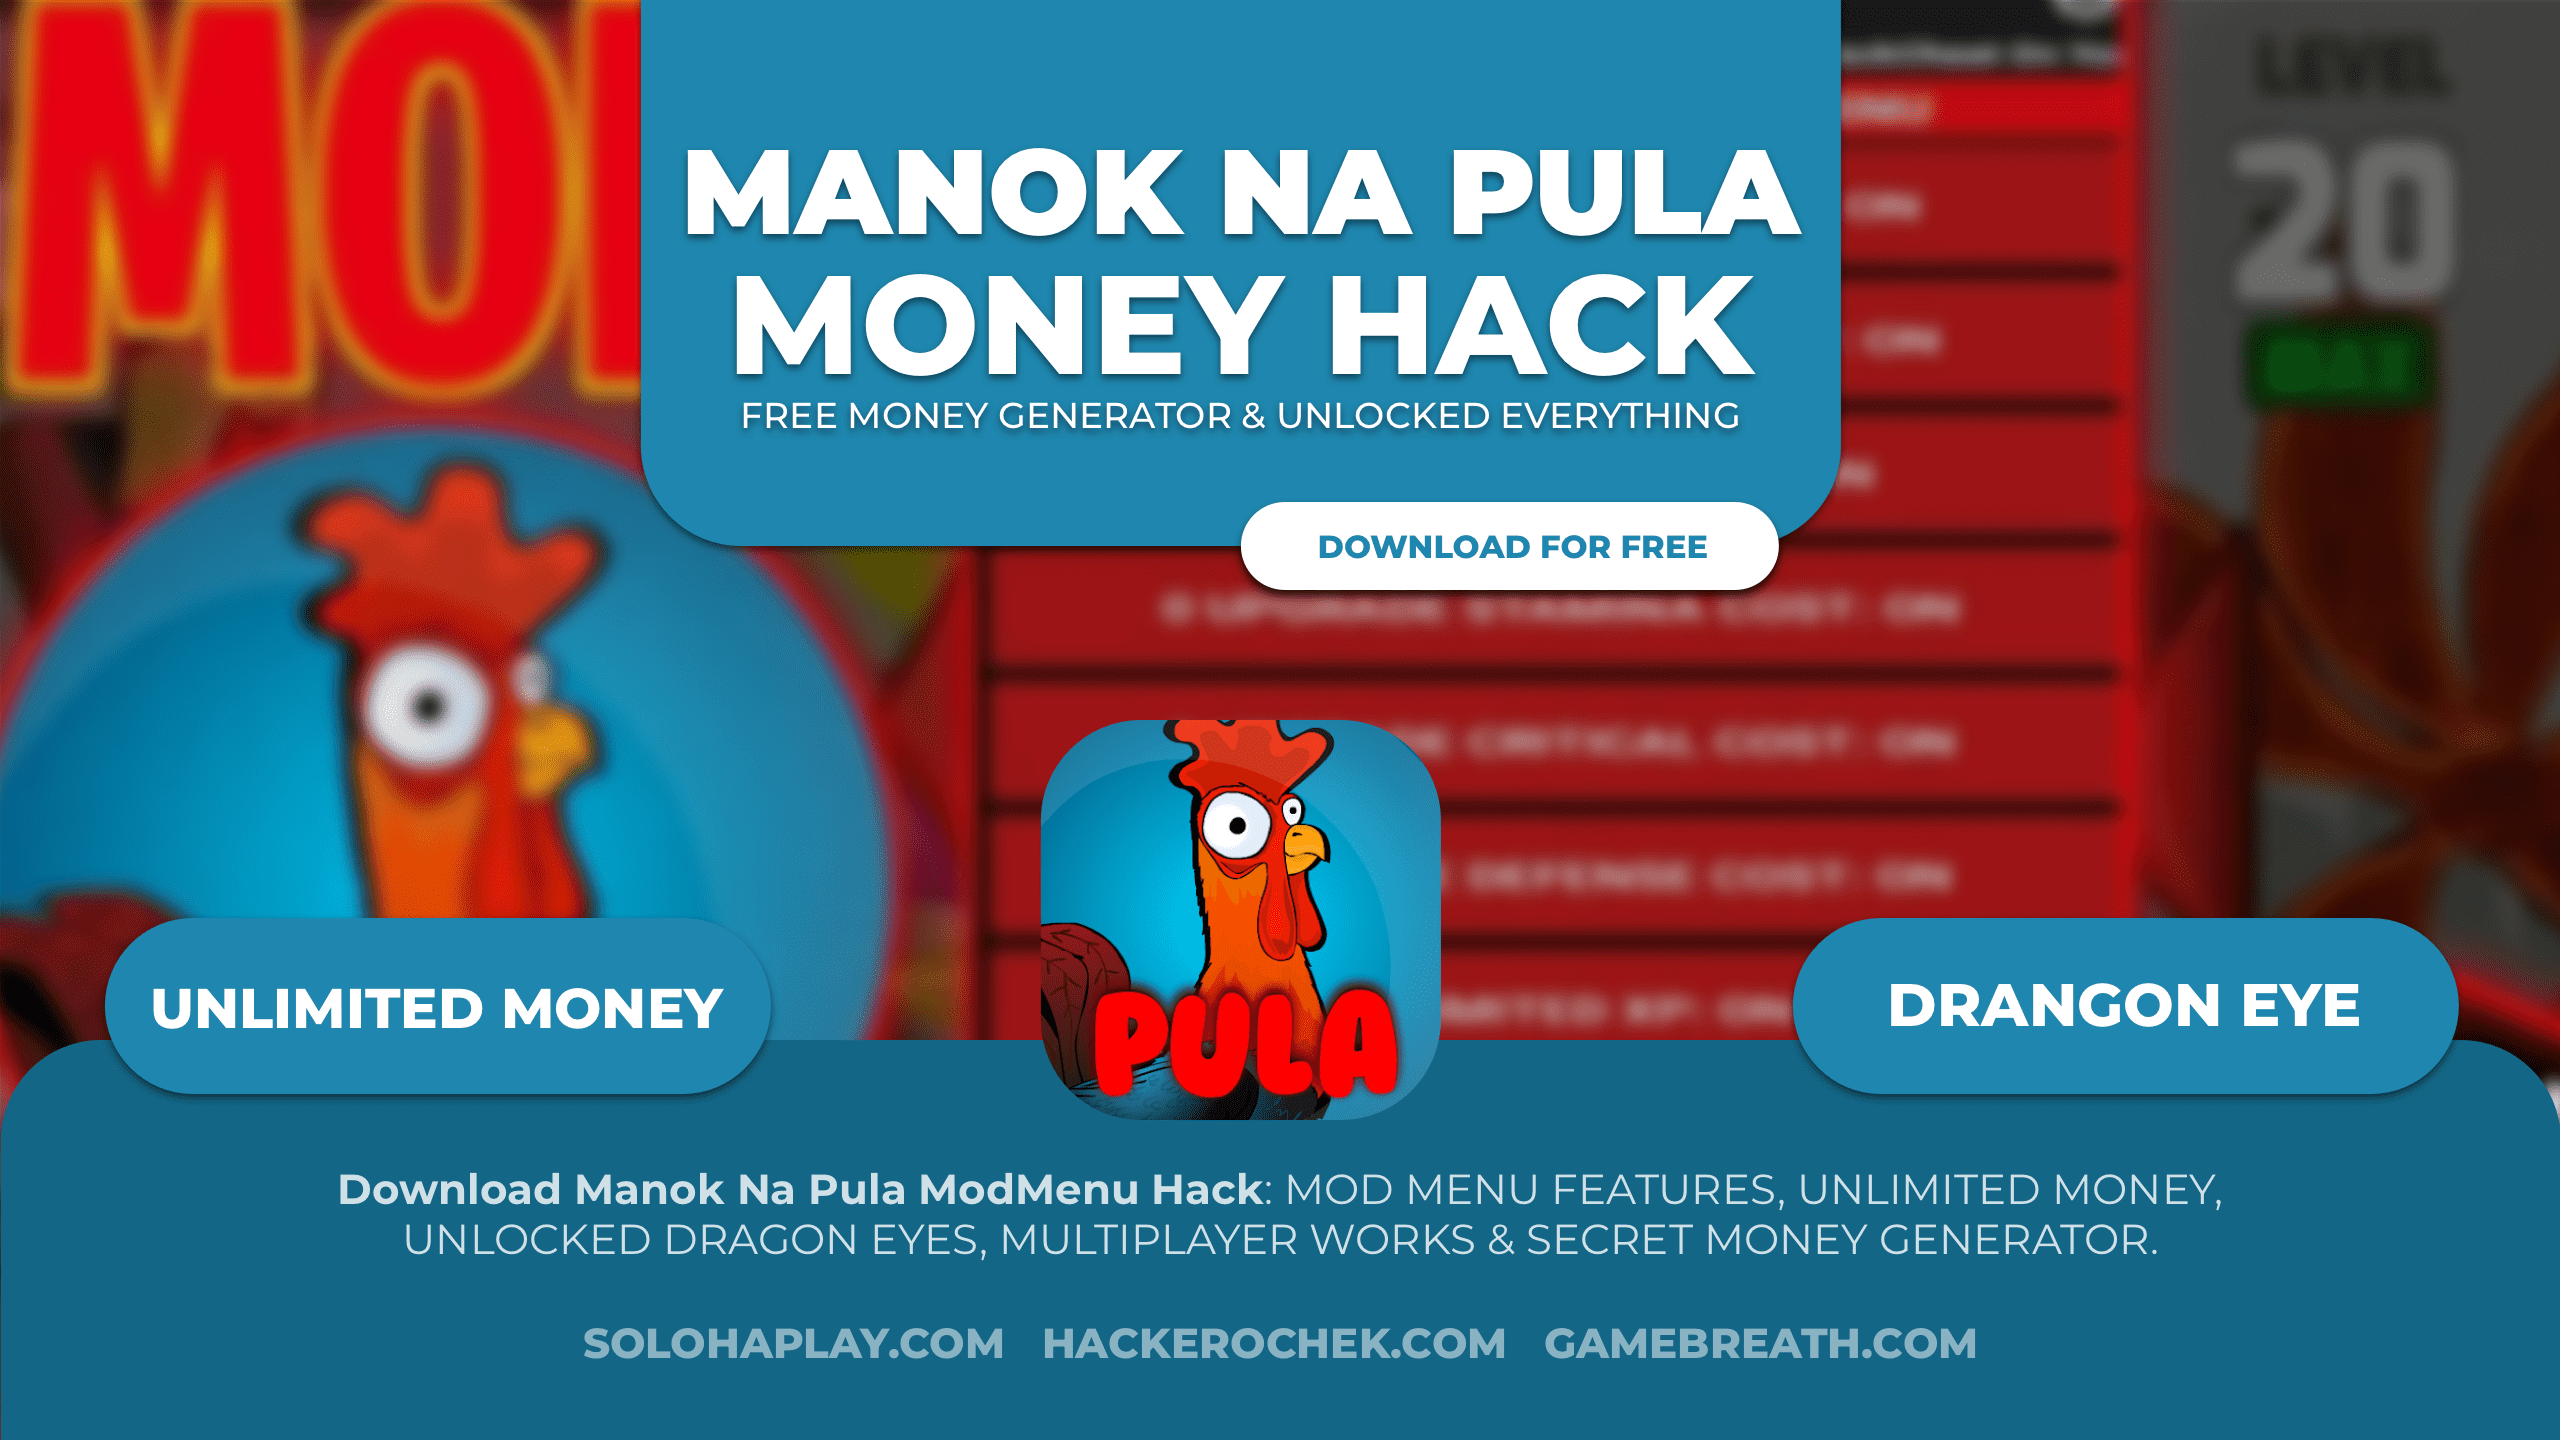 Manok Na Pula Mod Apk Hack Unlimited Dragon Eyes And Money Hackerochek 3947